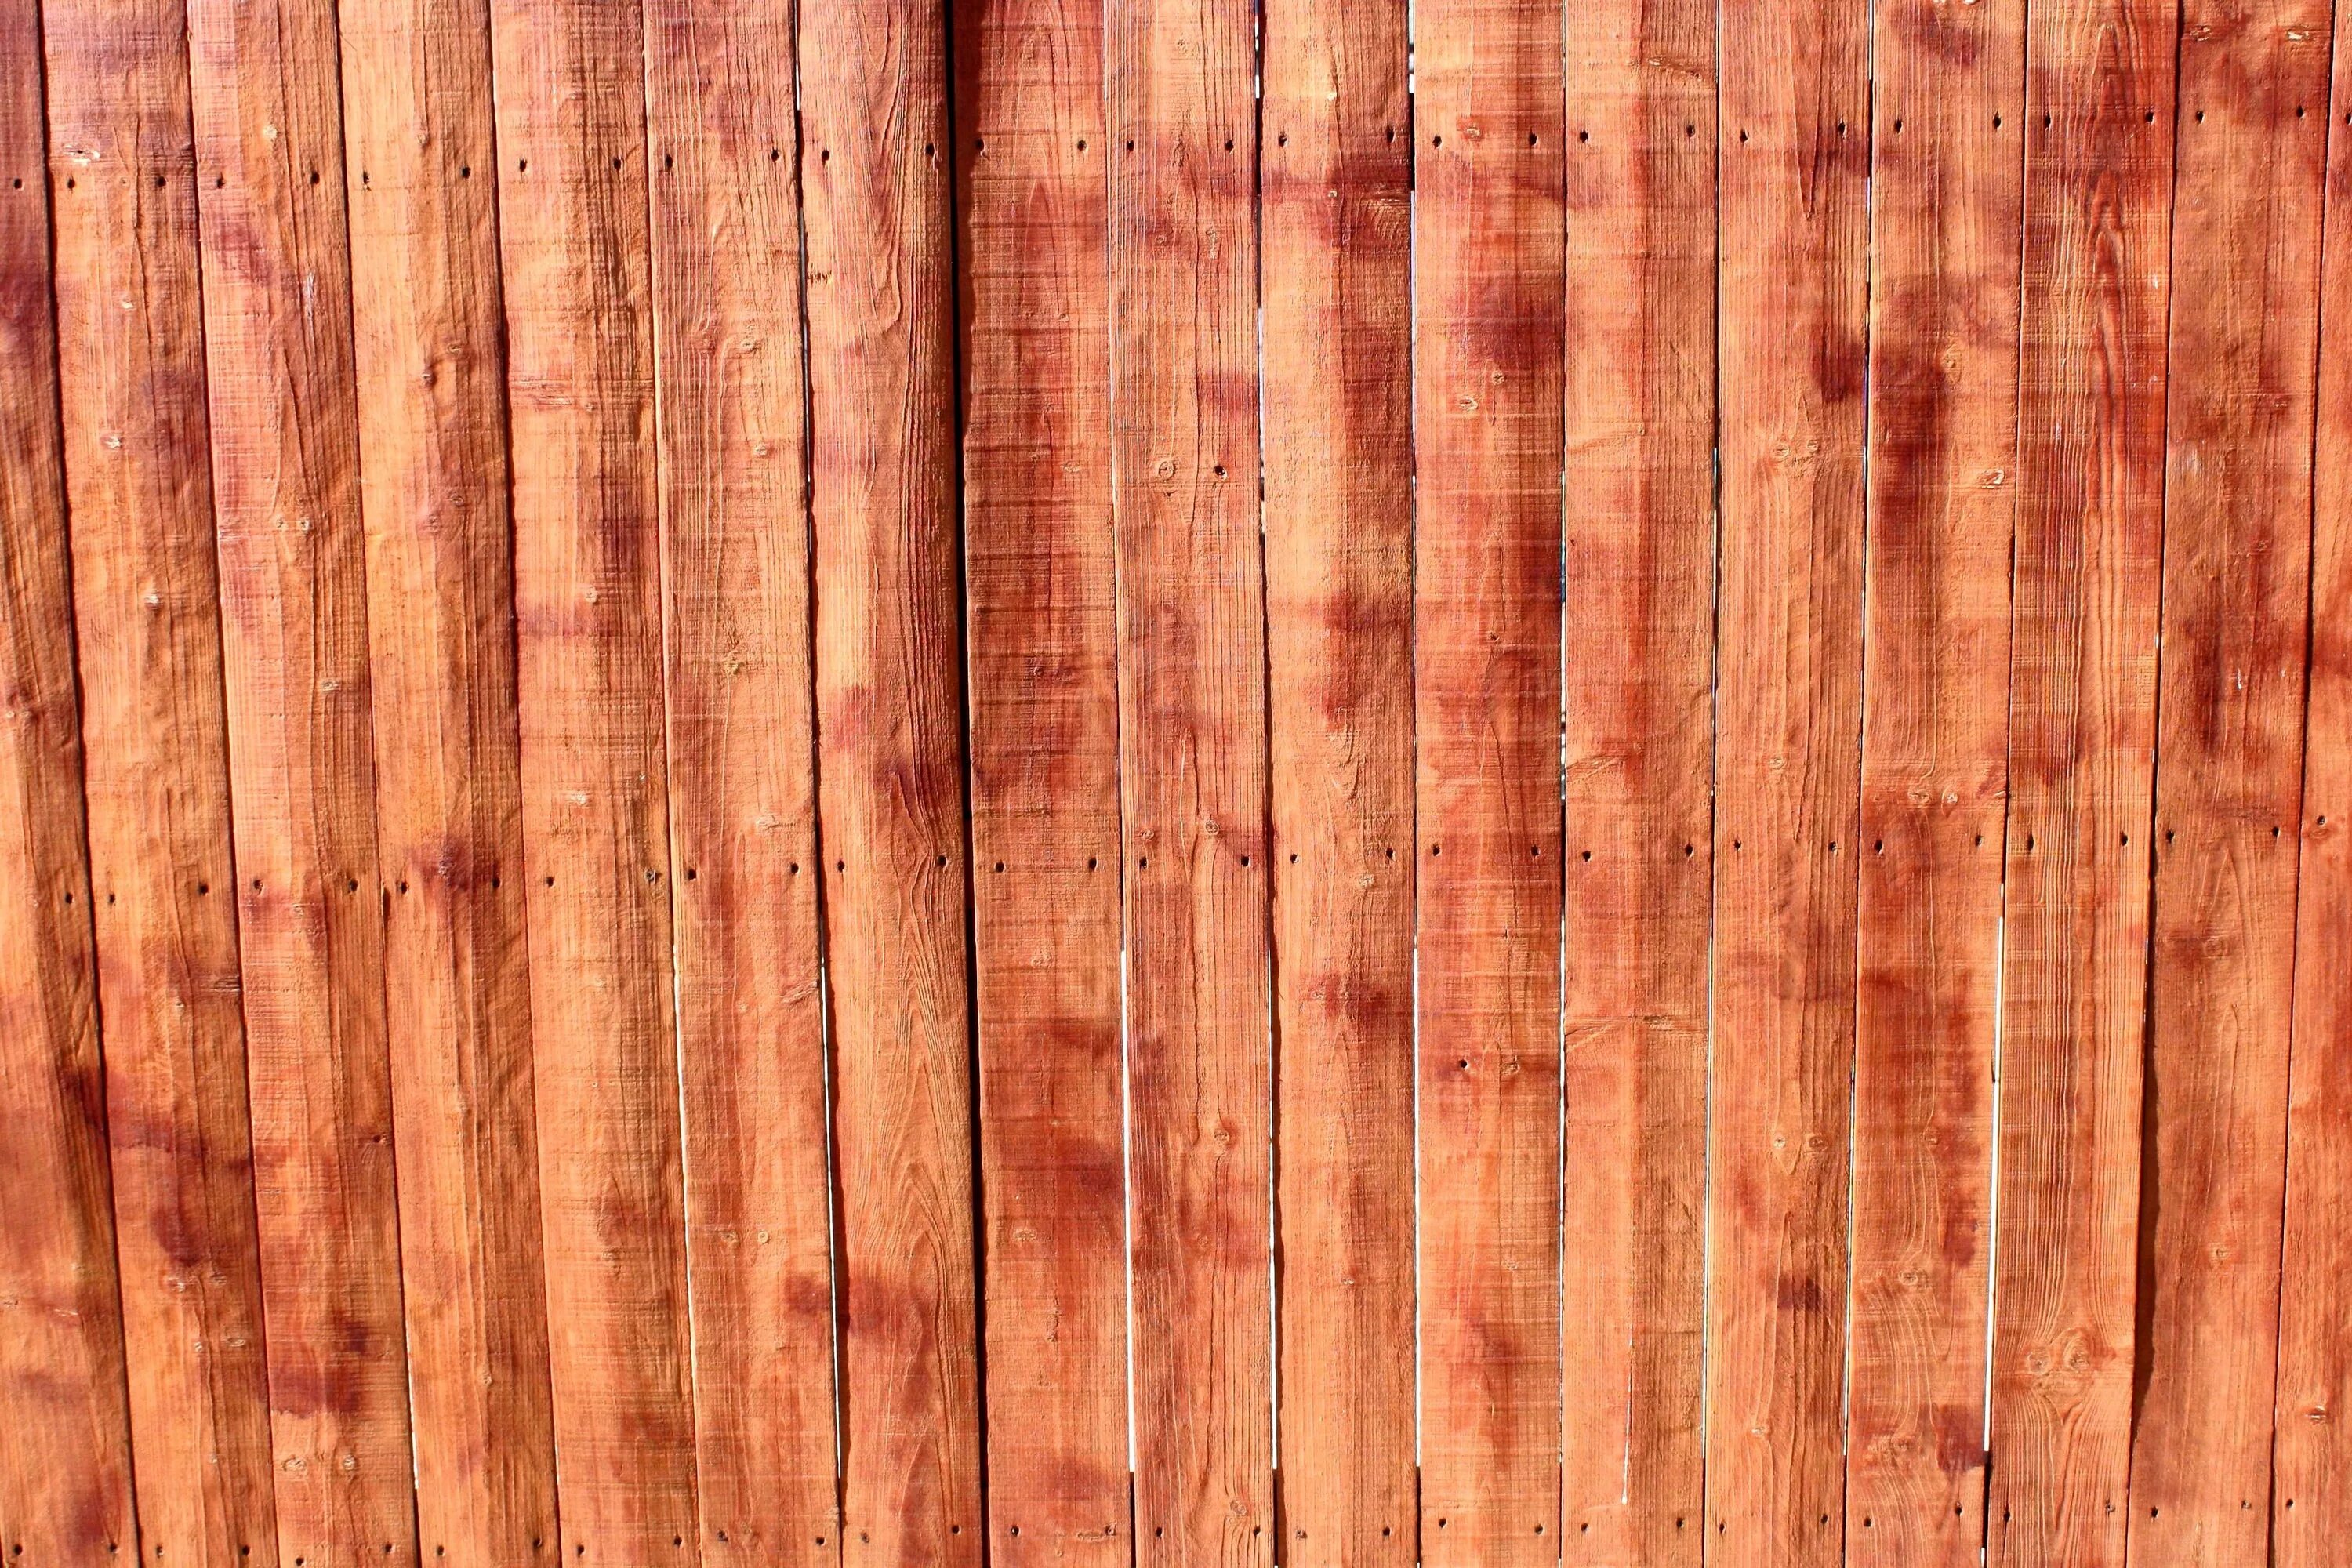 Картинки под дерево. Деревянный забор текстура. Текстура дерева забор. Фон дерево. Фон деревянные доски.